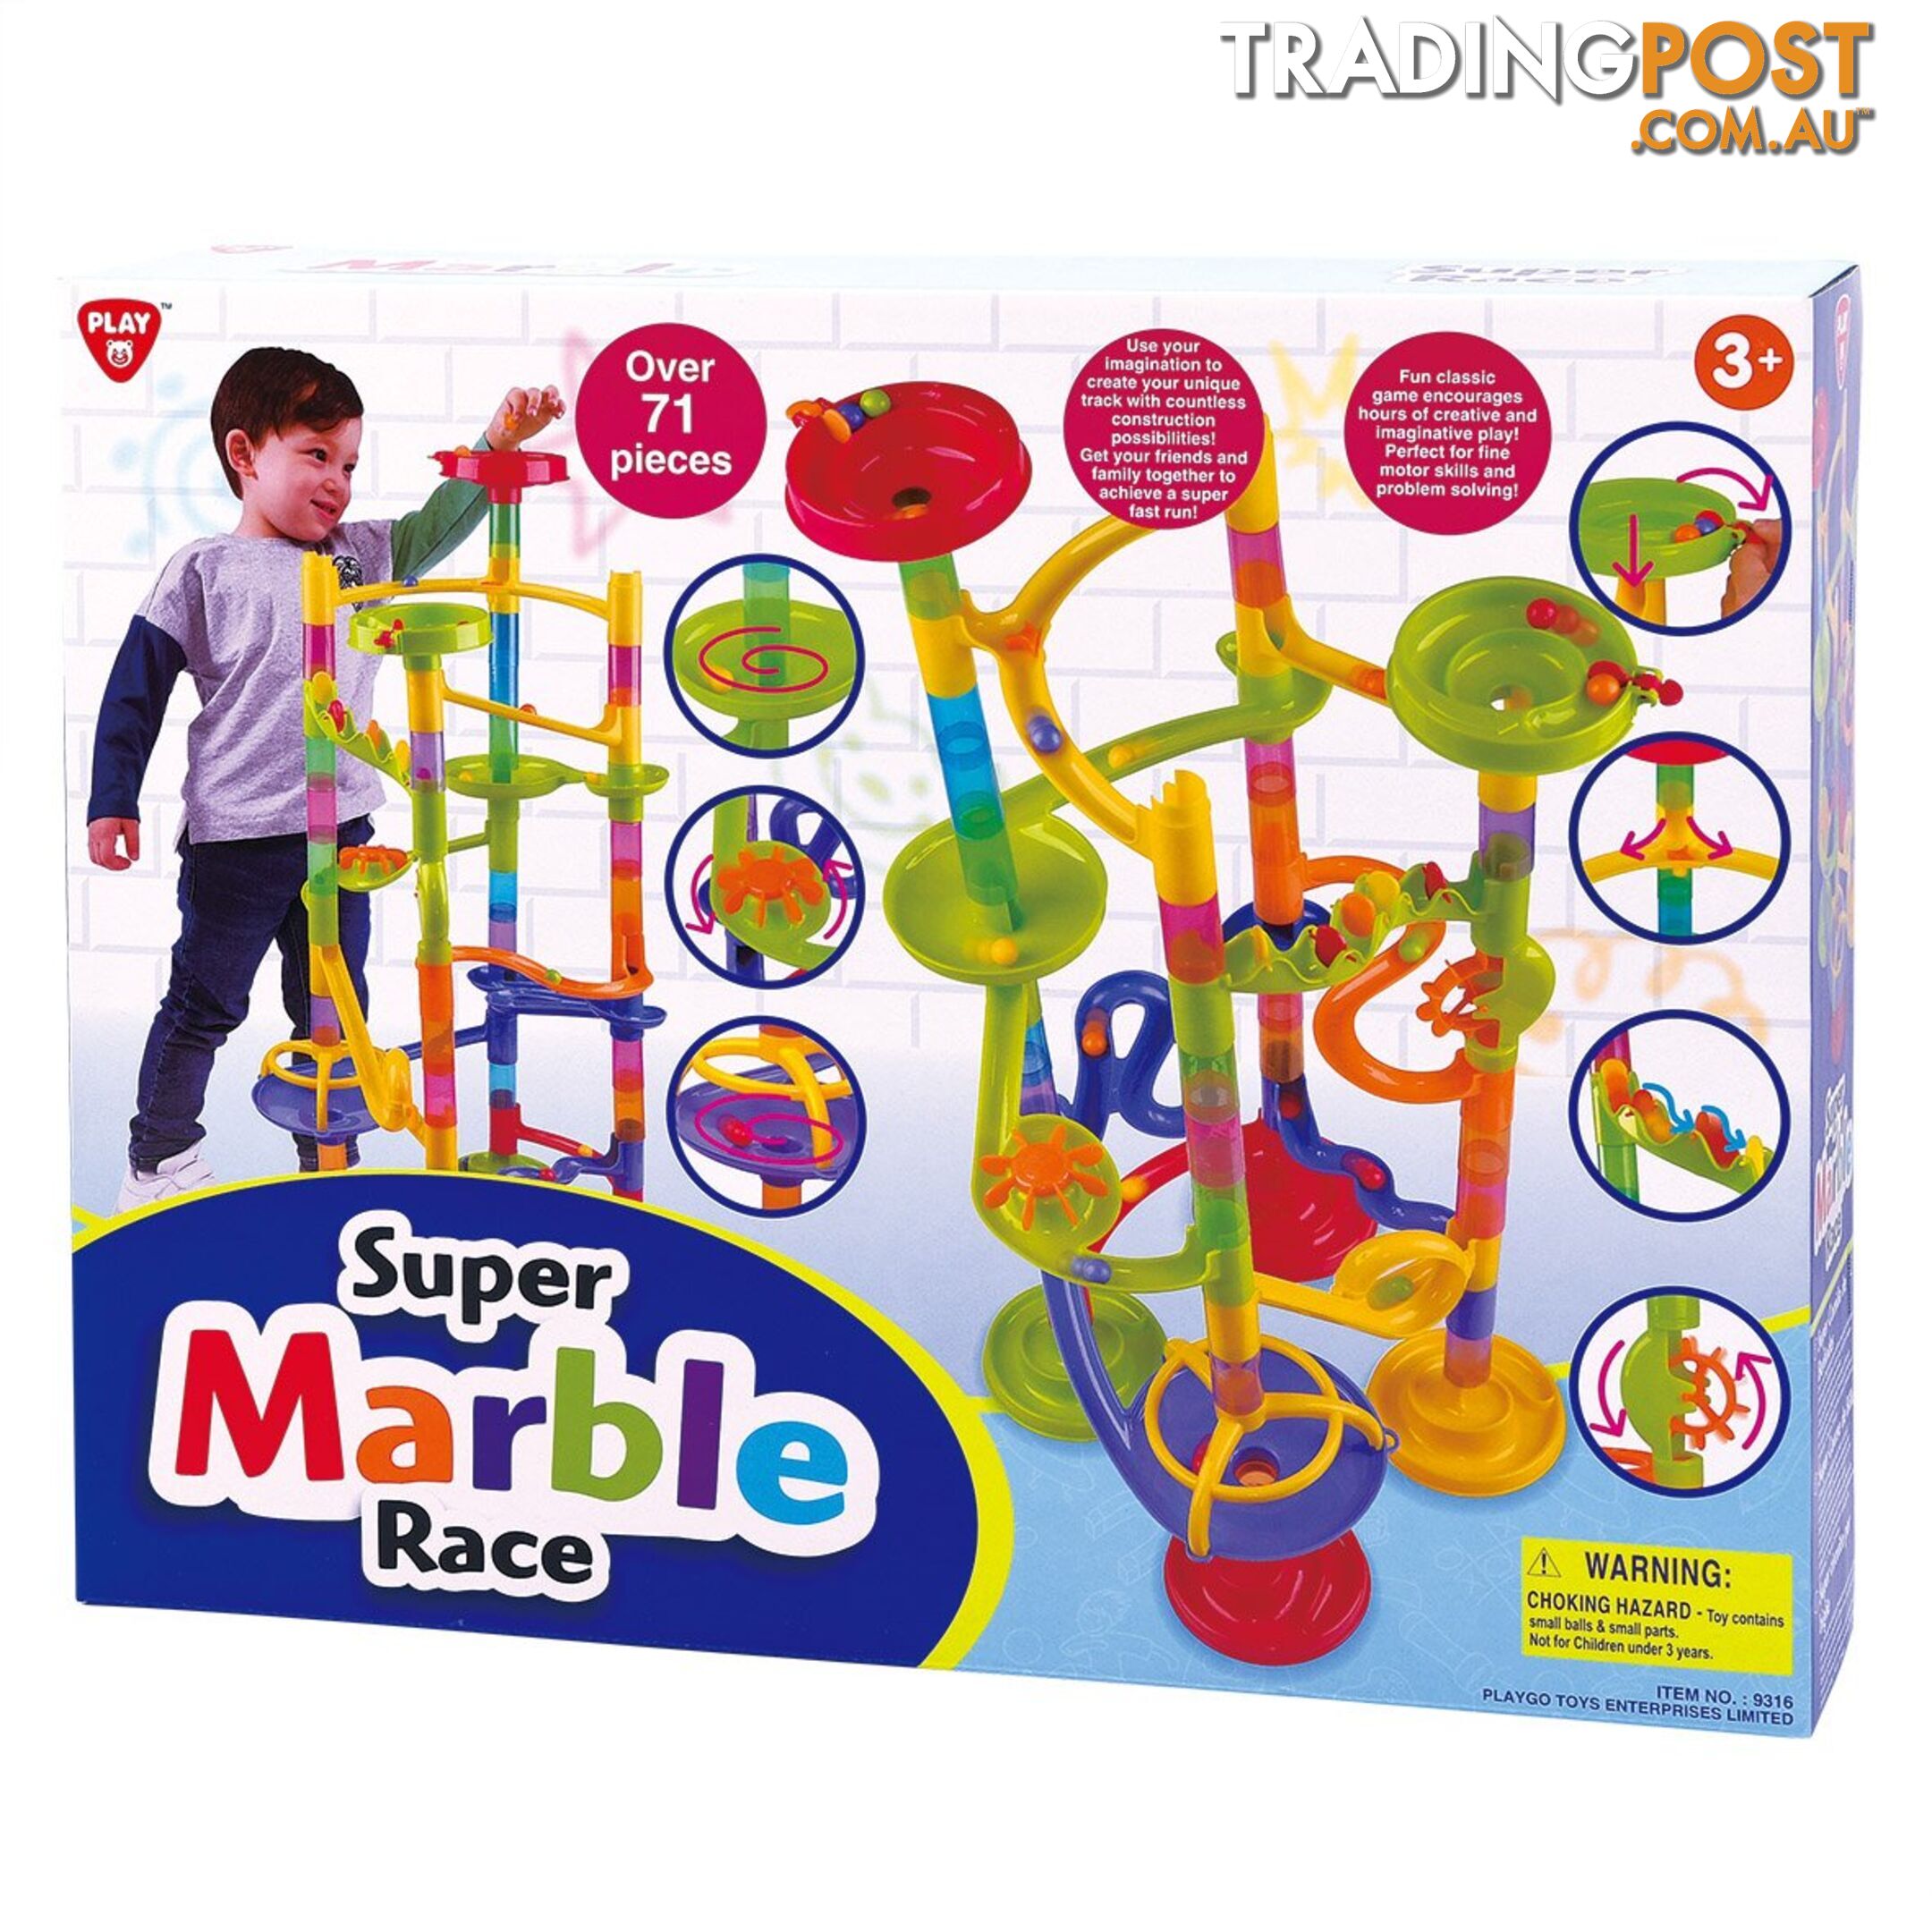 Super Marble Race Playset - 71 Pieces Playgo Toys Ent. Ltd Art28709 - 4892401093165